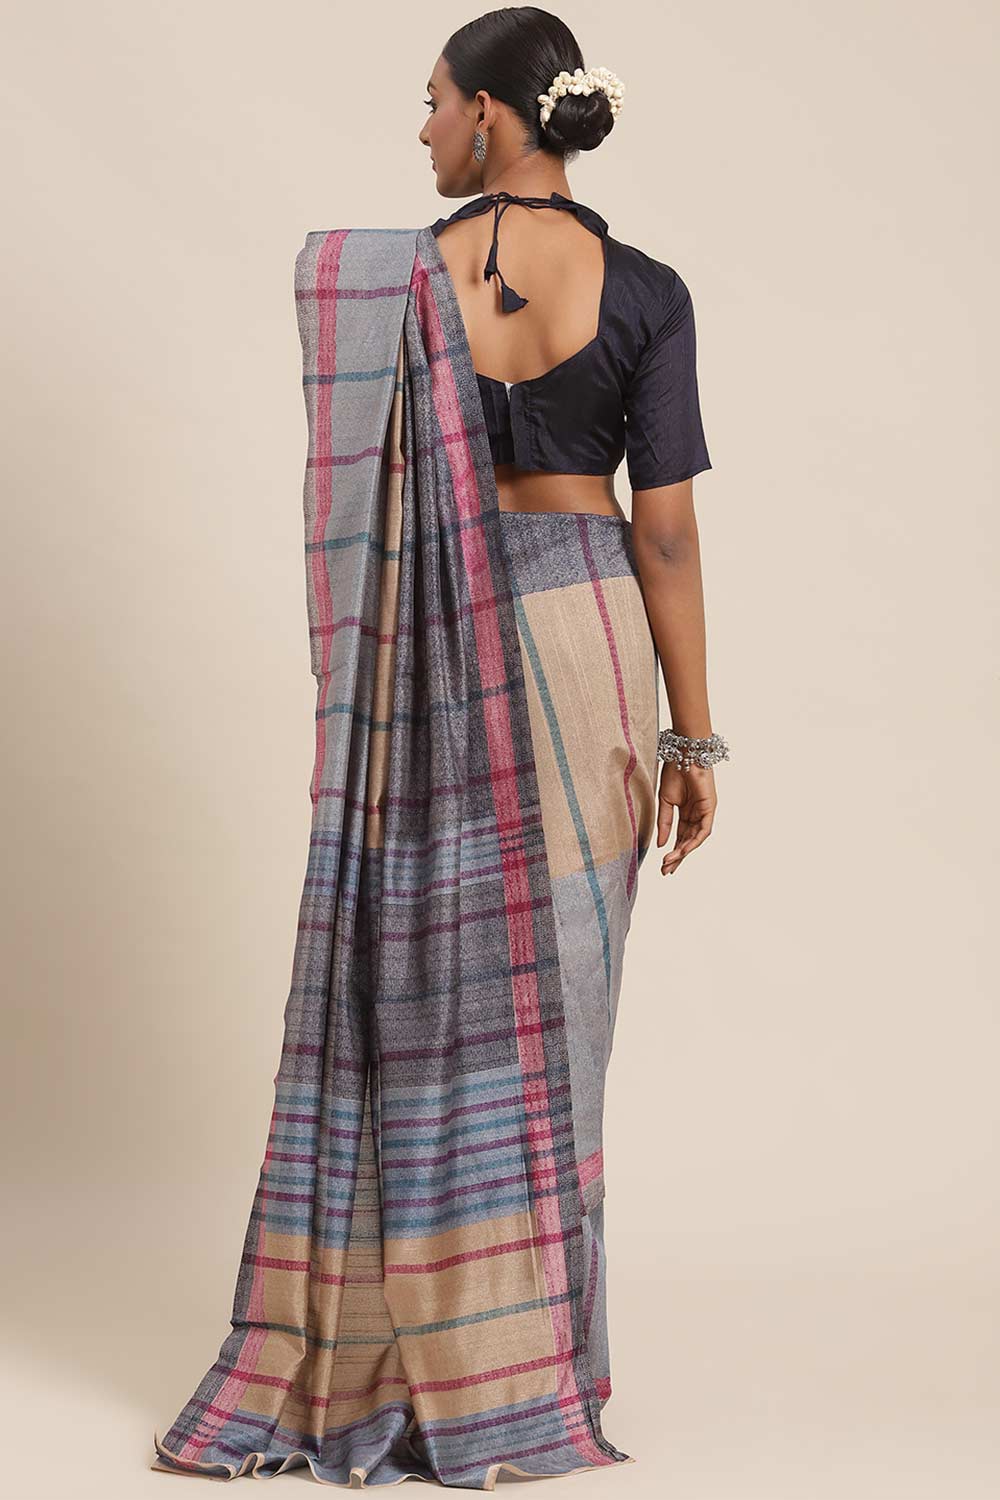 Nora Blue Bhagalpuri Silk Striped Printed Taant One Minute Saree